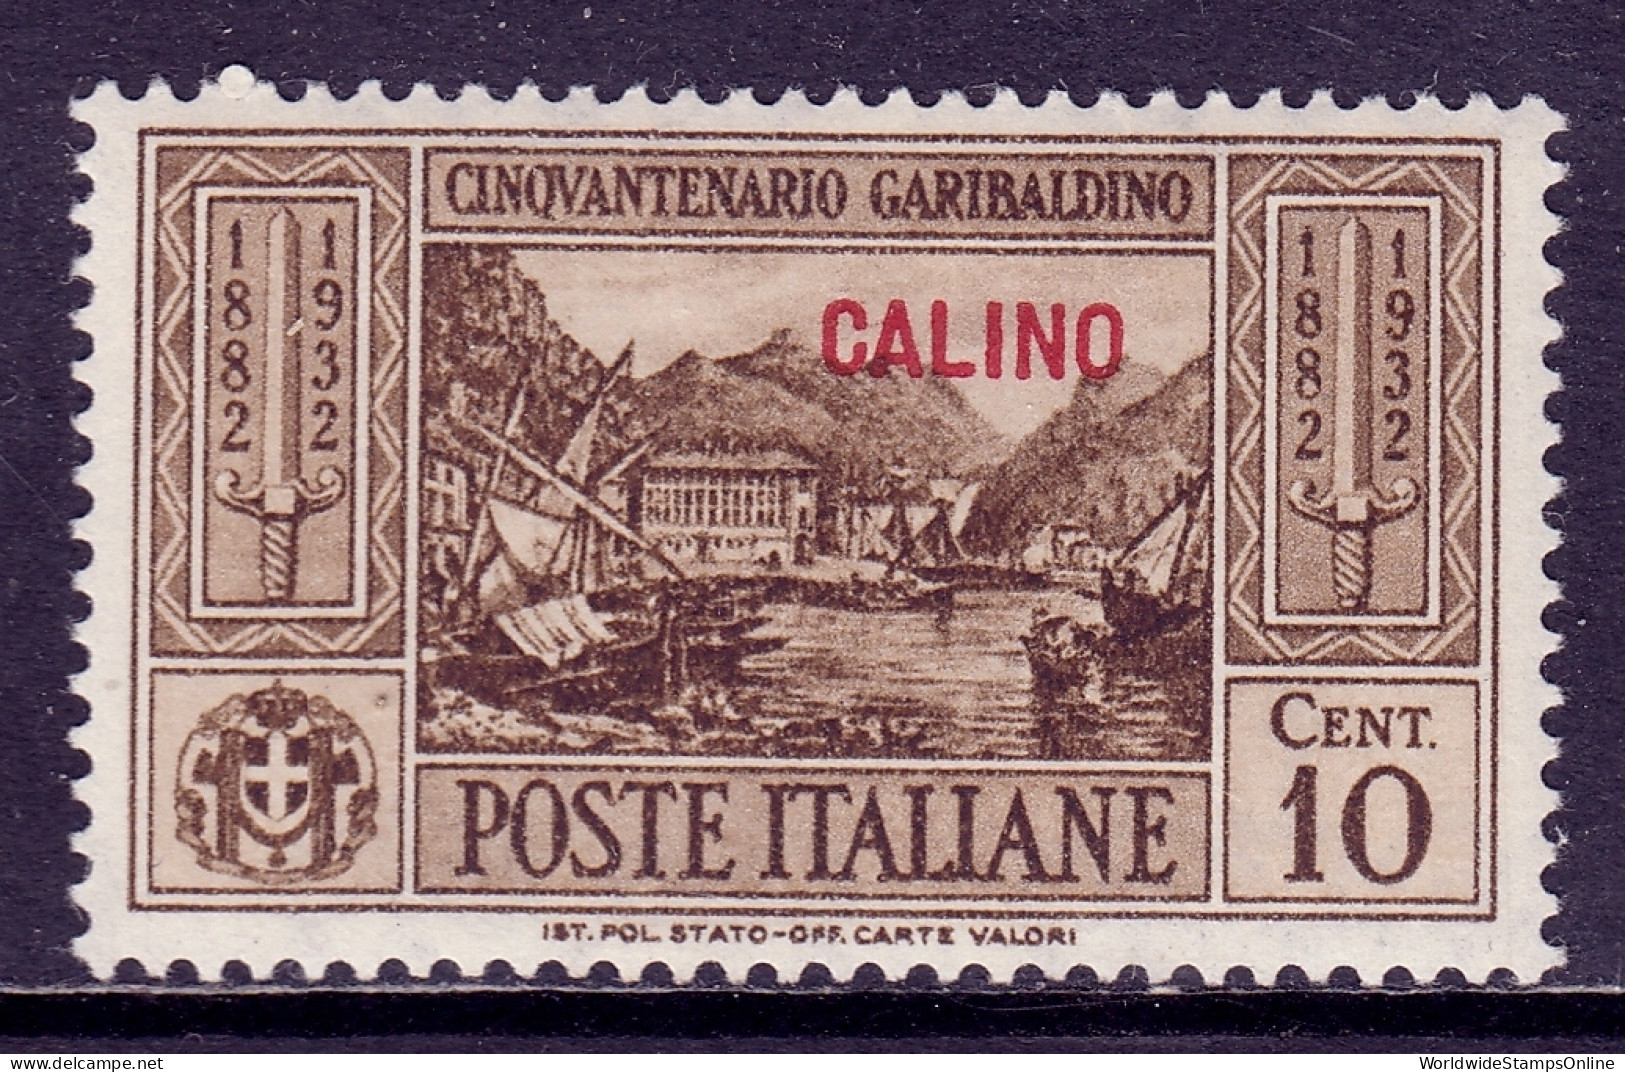 Italy (Calino) - Scott #17 - MH - SCV $18 - Aegean (Calino)